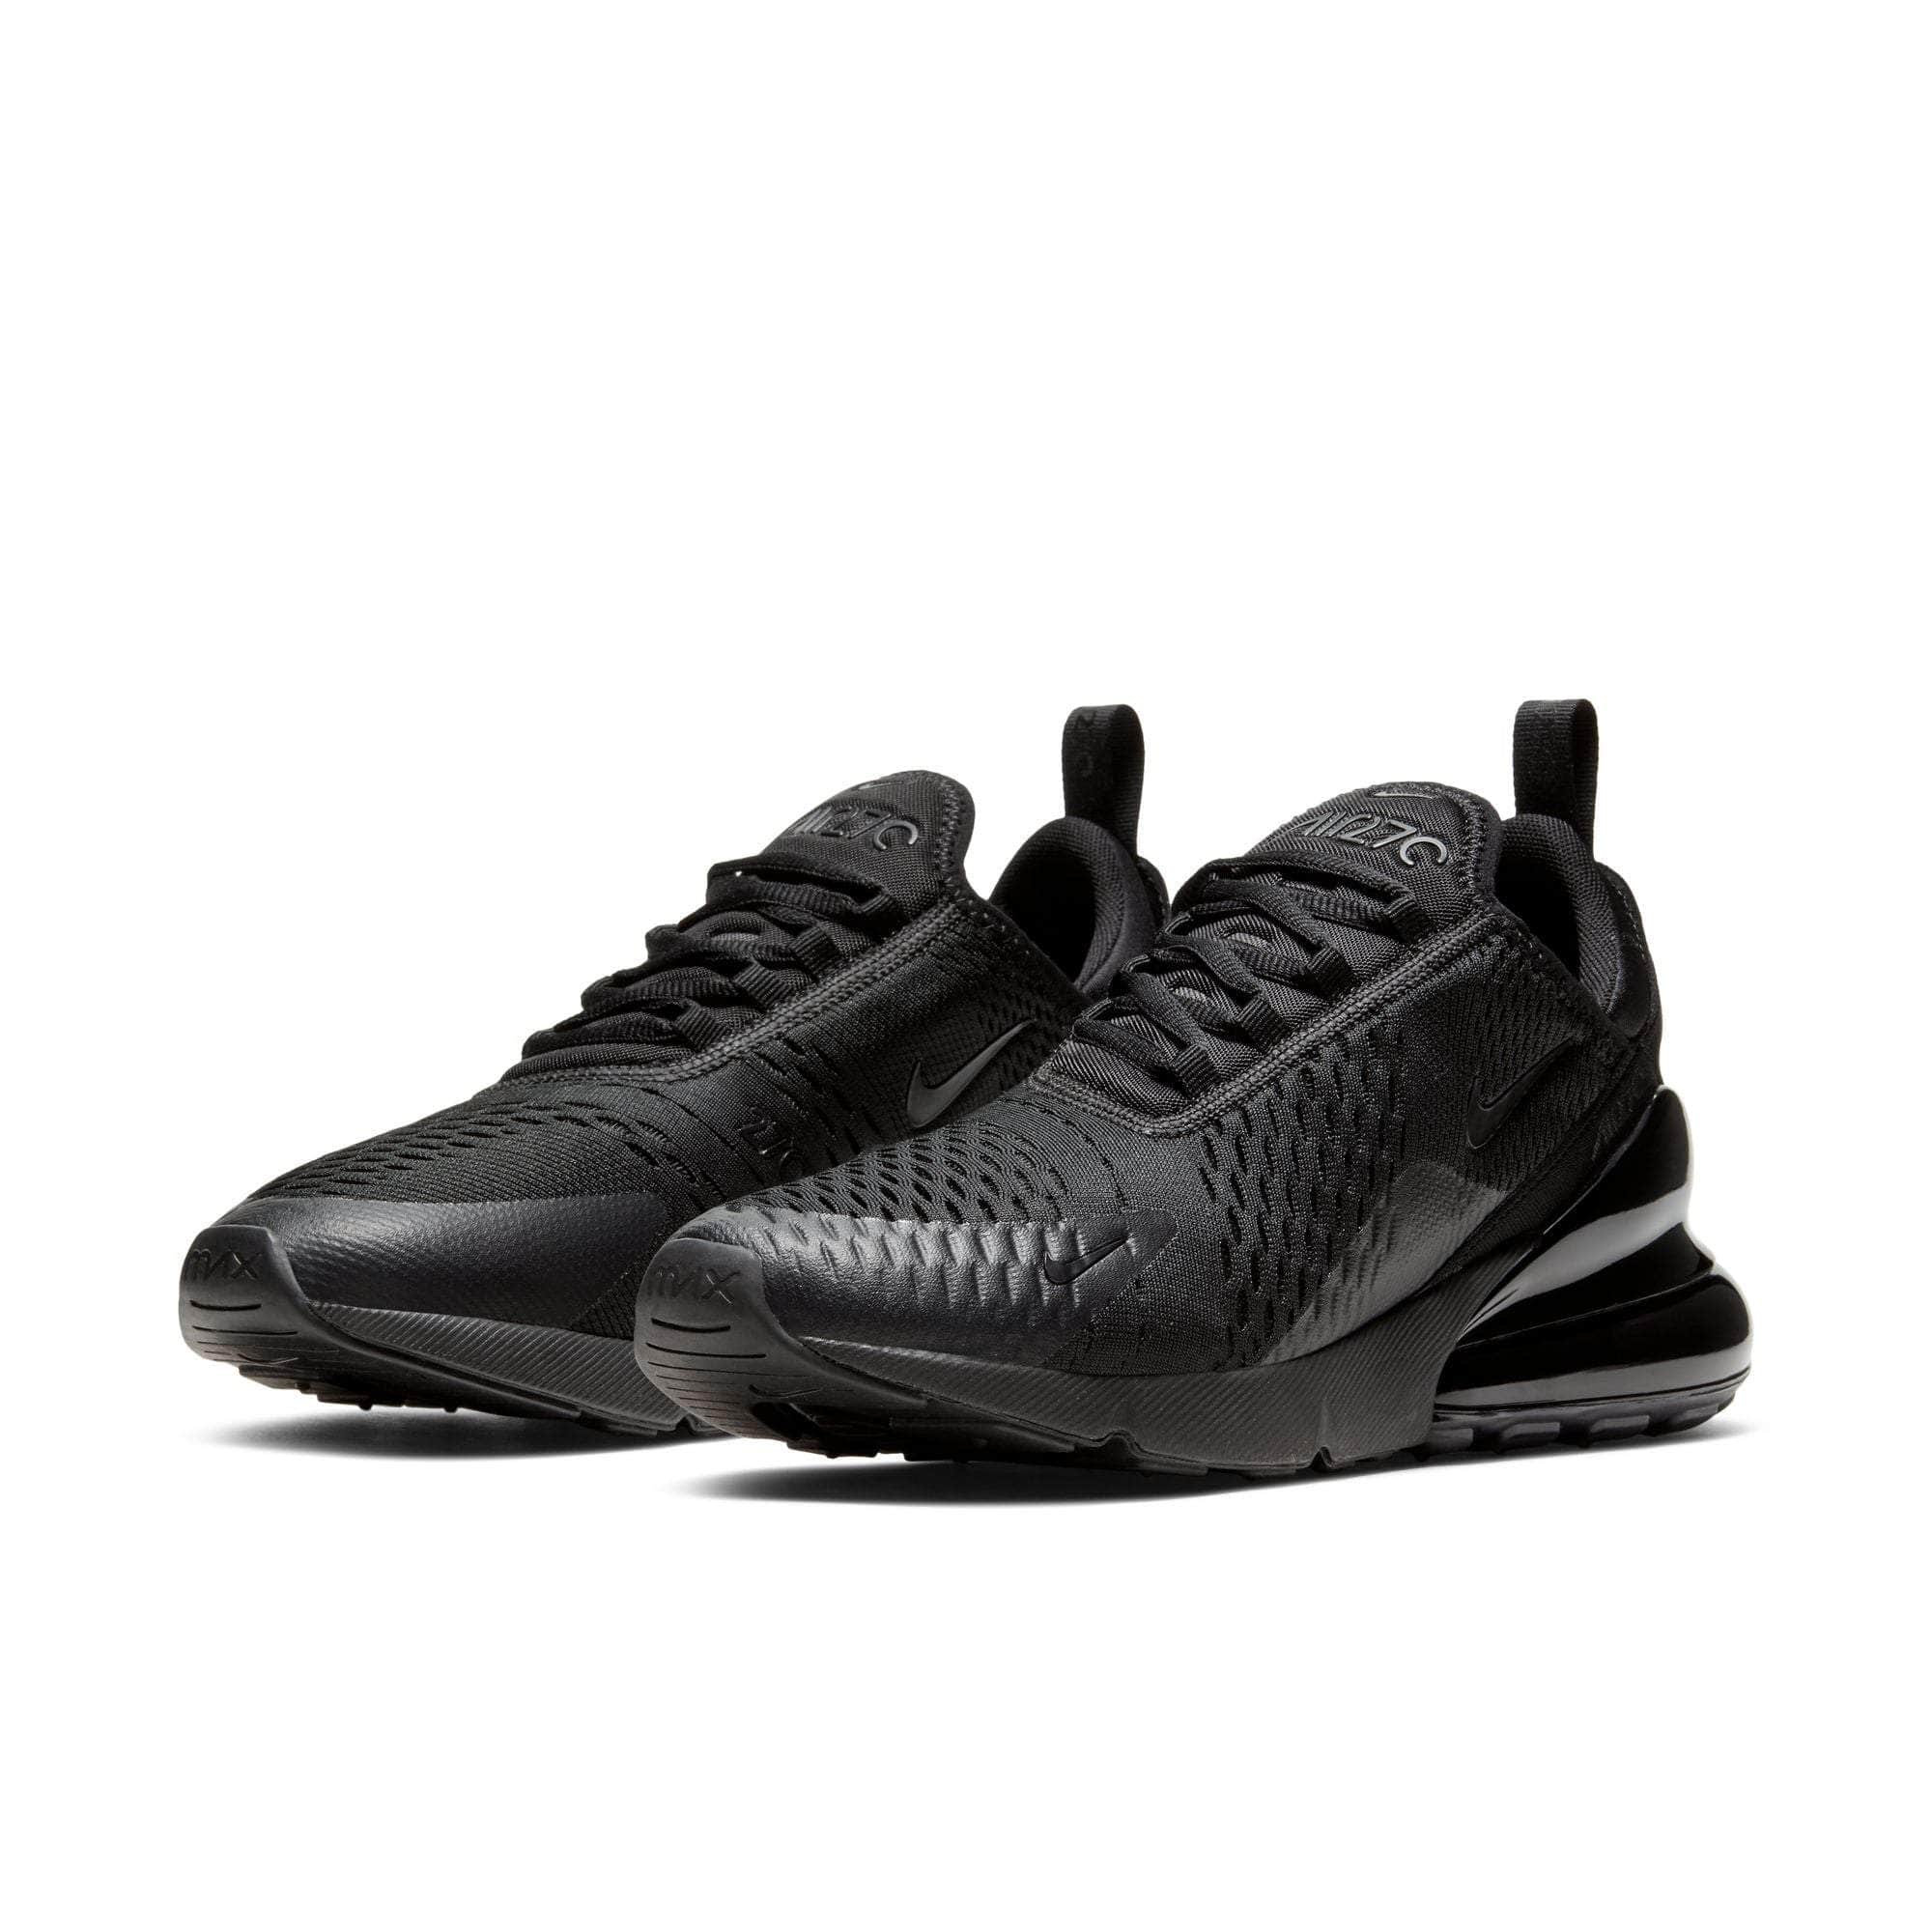 NIKE FOOTWEAR Nike Air Max 270 "Triple Black" - Men's